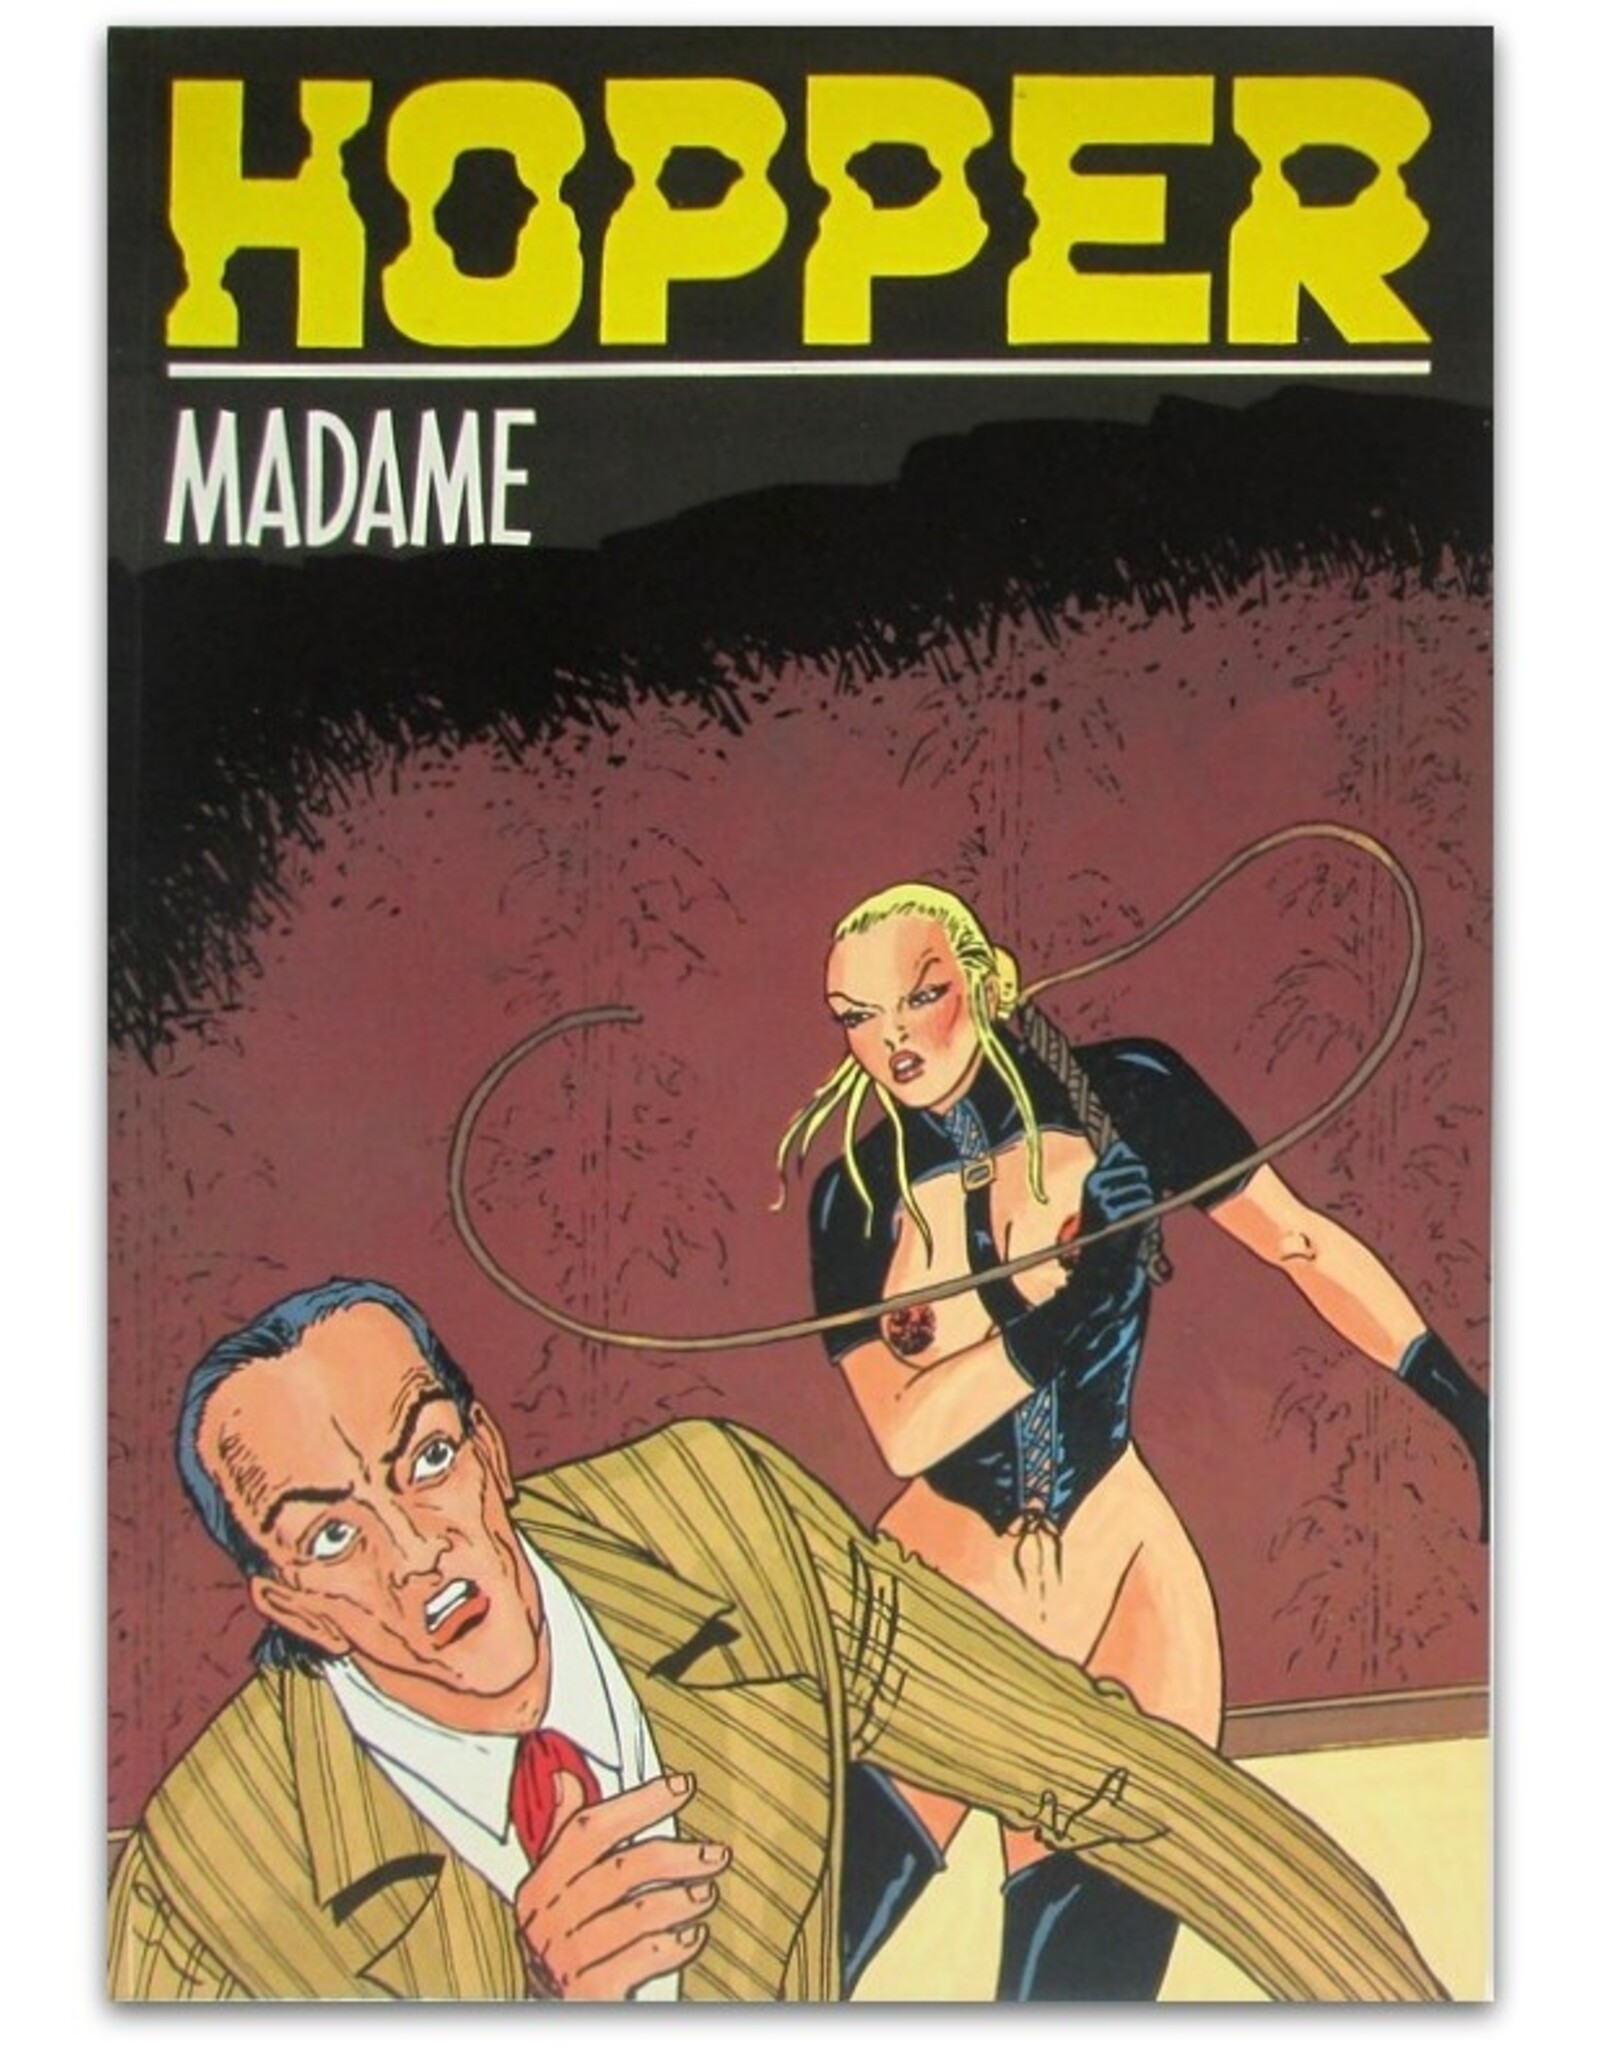 Hopper - Madame [COMPLETE]